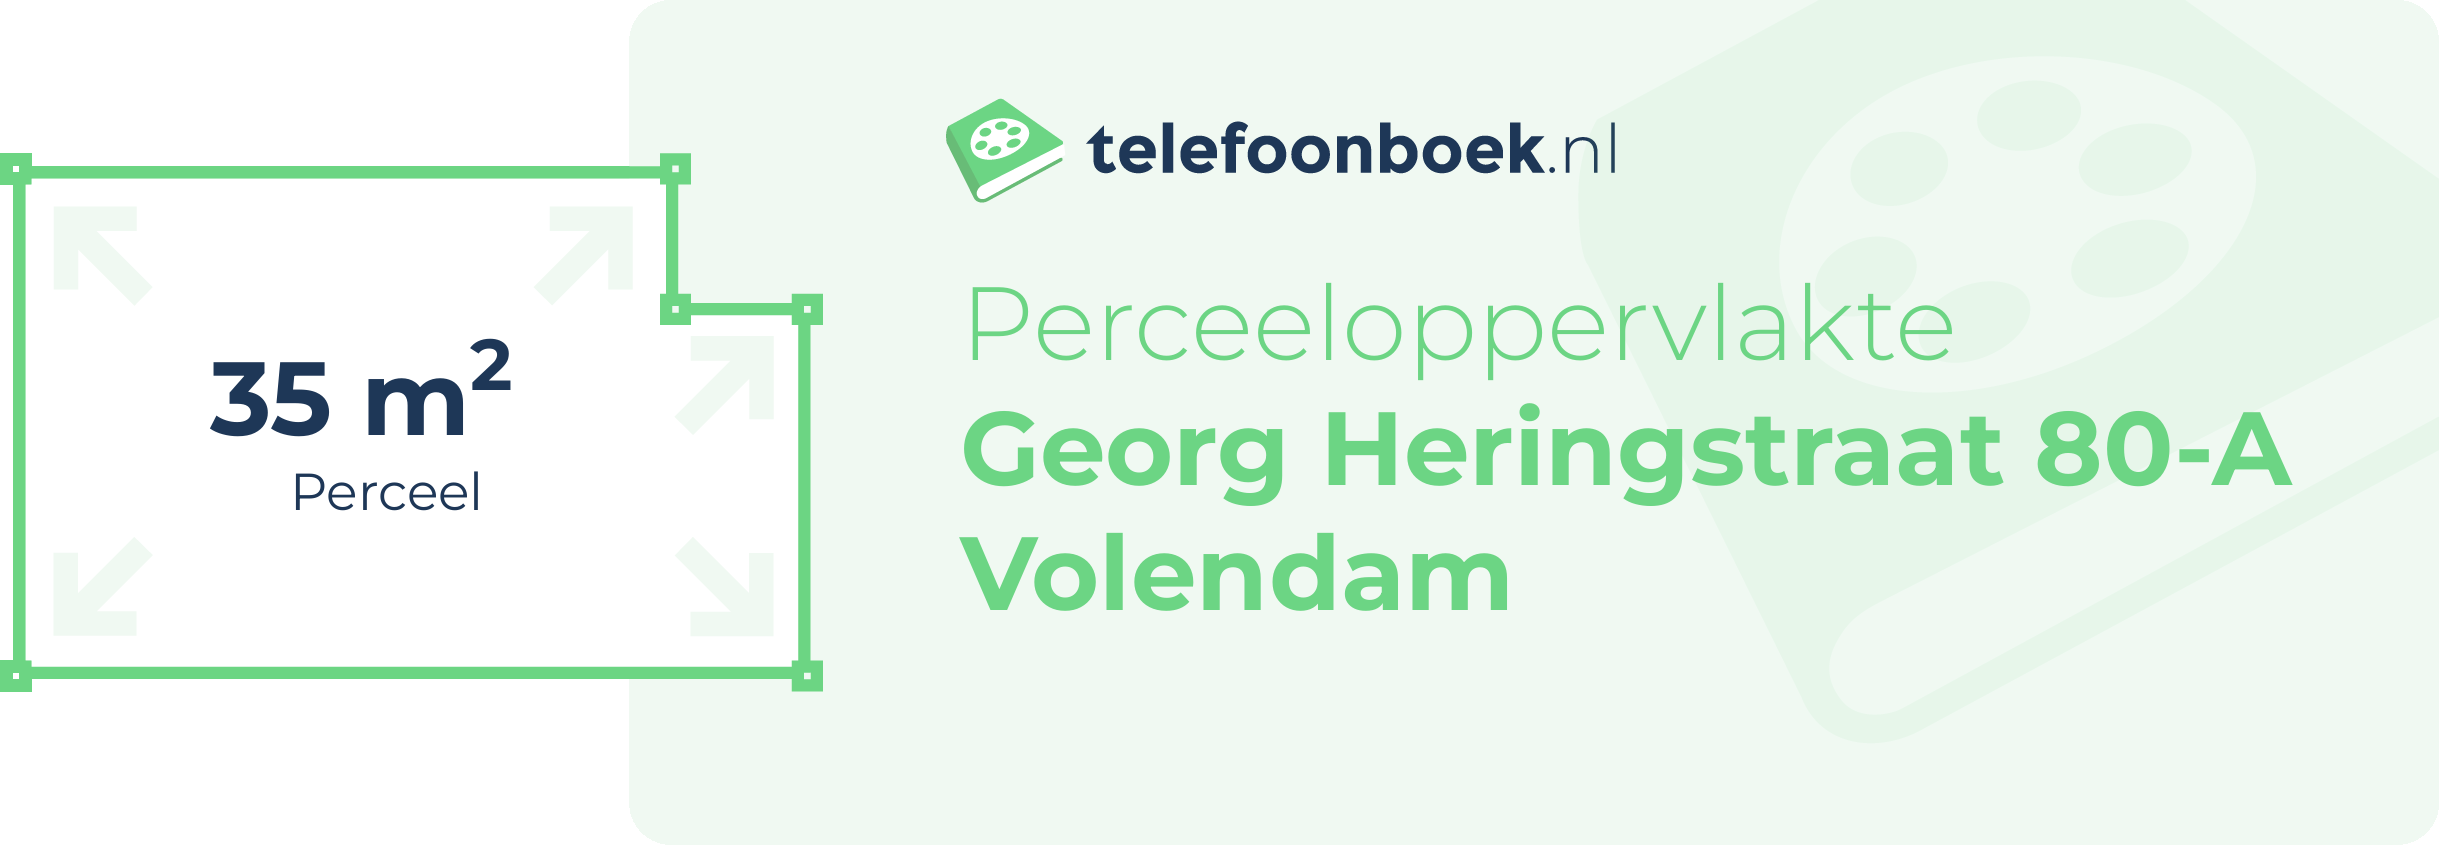 Perceeloppervlakte Georg Heringstraat 80-A Volendam